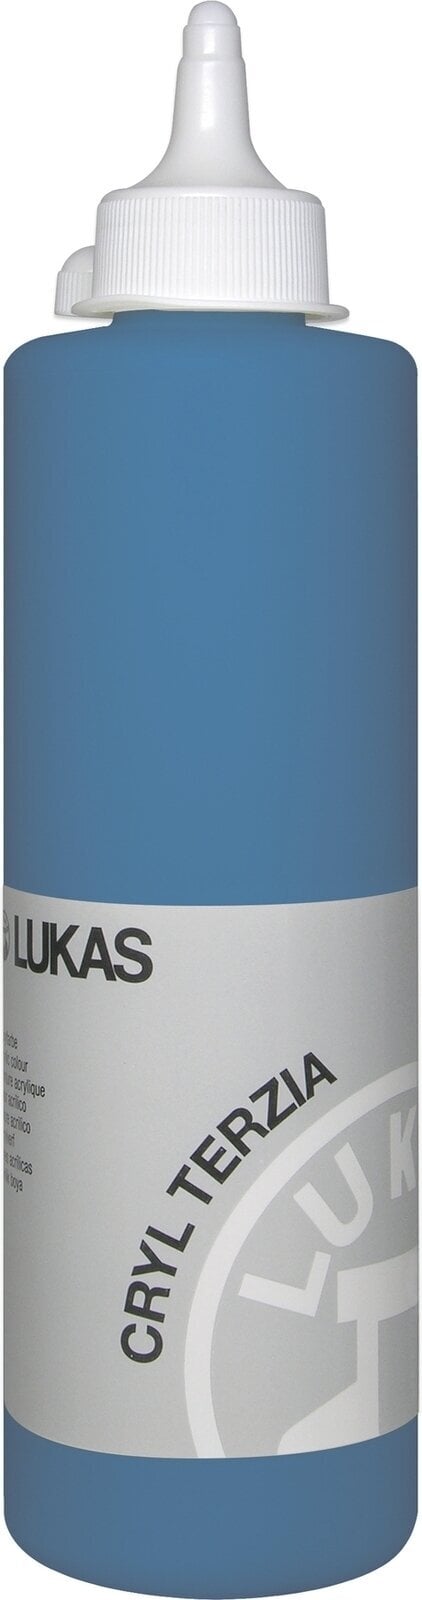 Acrylic Paint Lukas Cryl Terzia Acrylic Paint Plastic Bottle Acrylic Paint Cerulean Blue 500 ml 1 pc